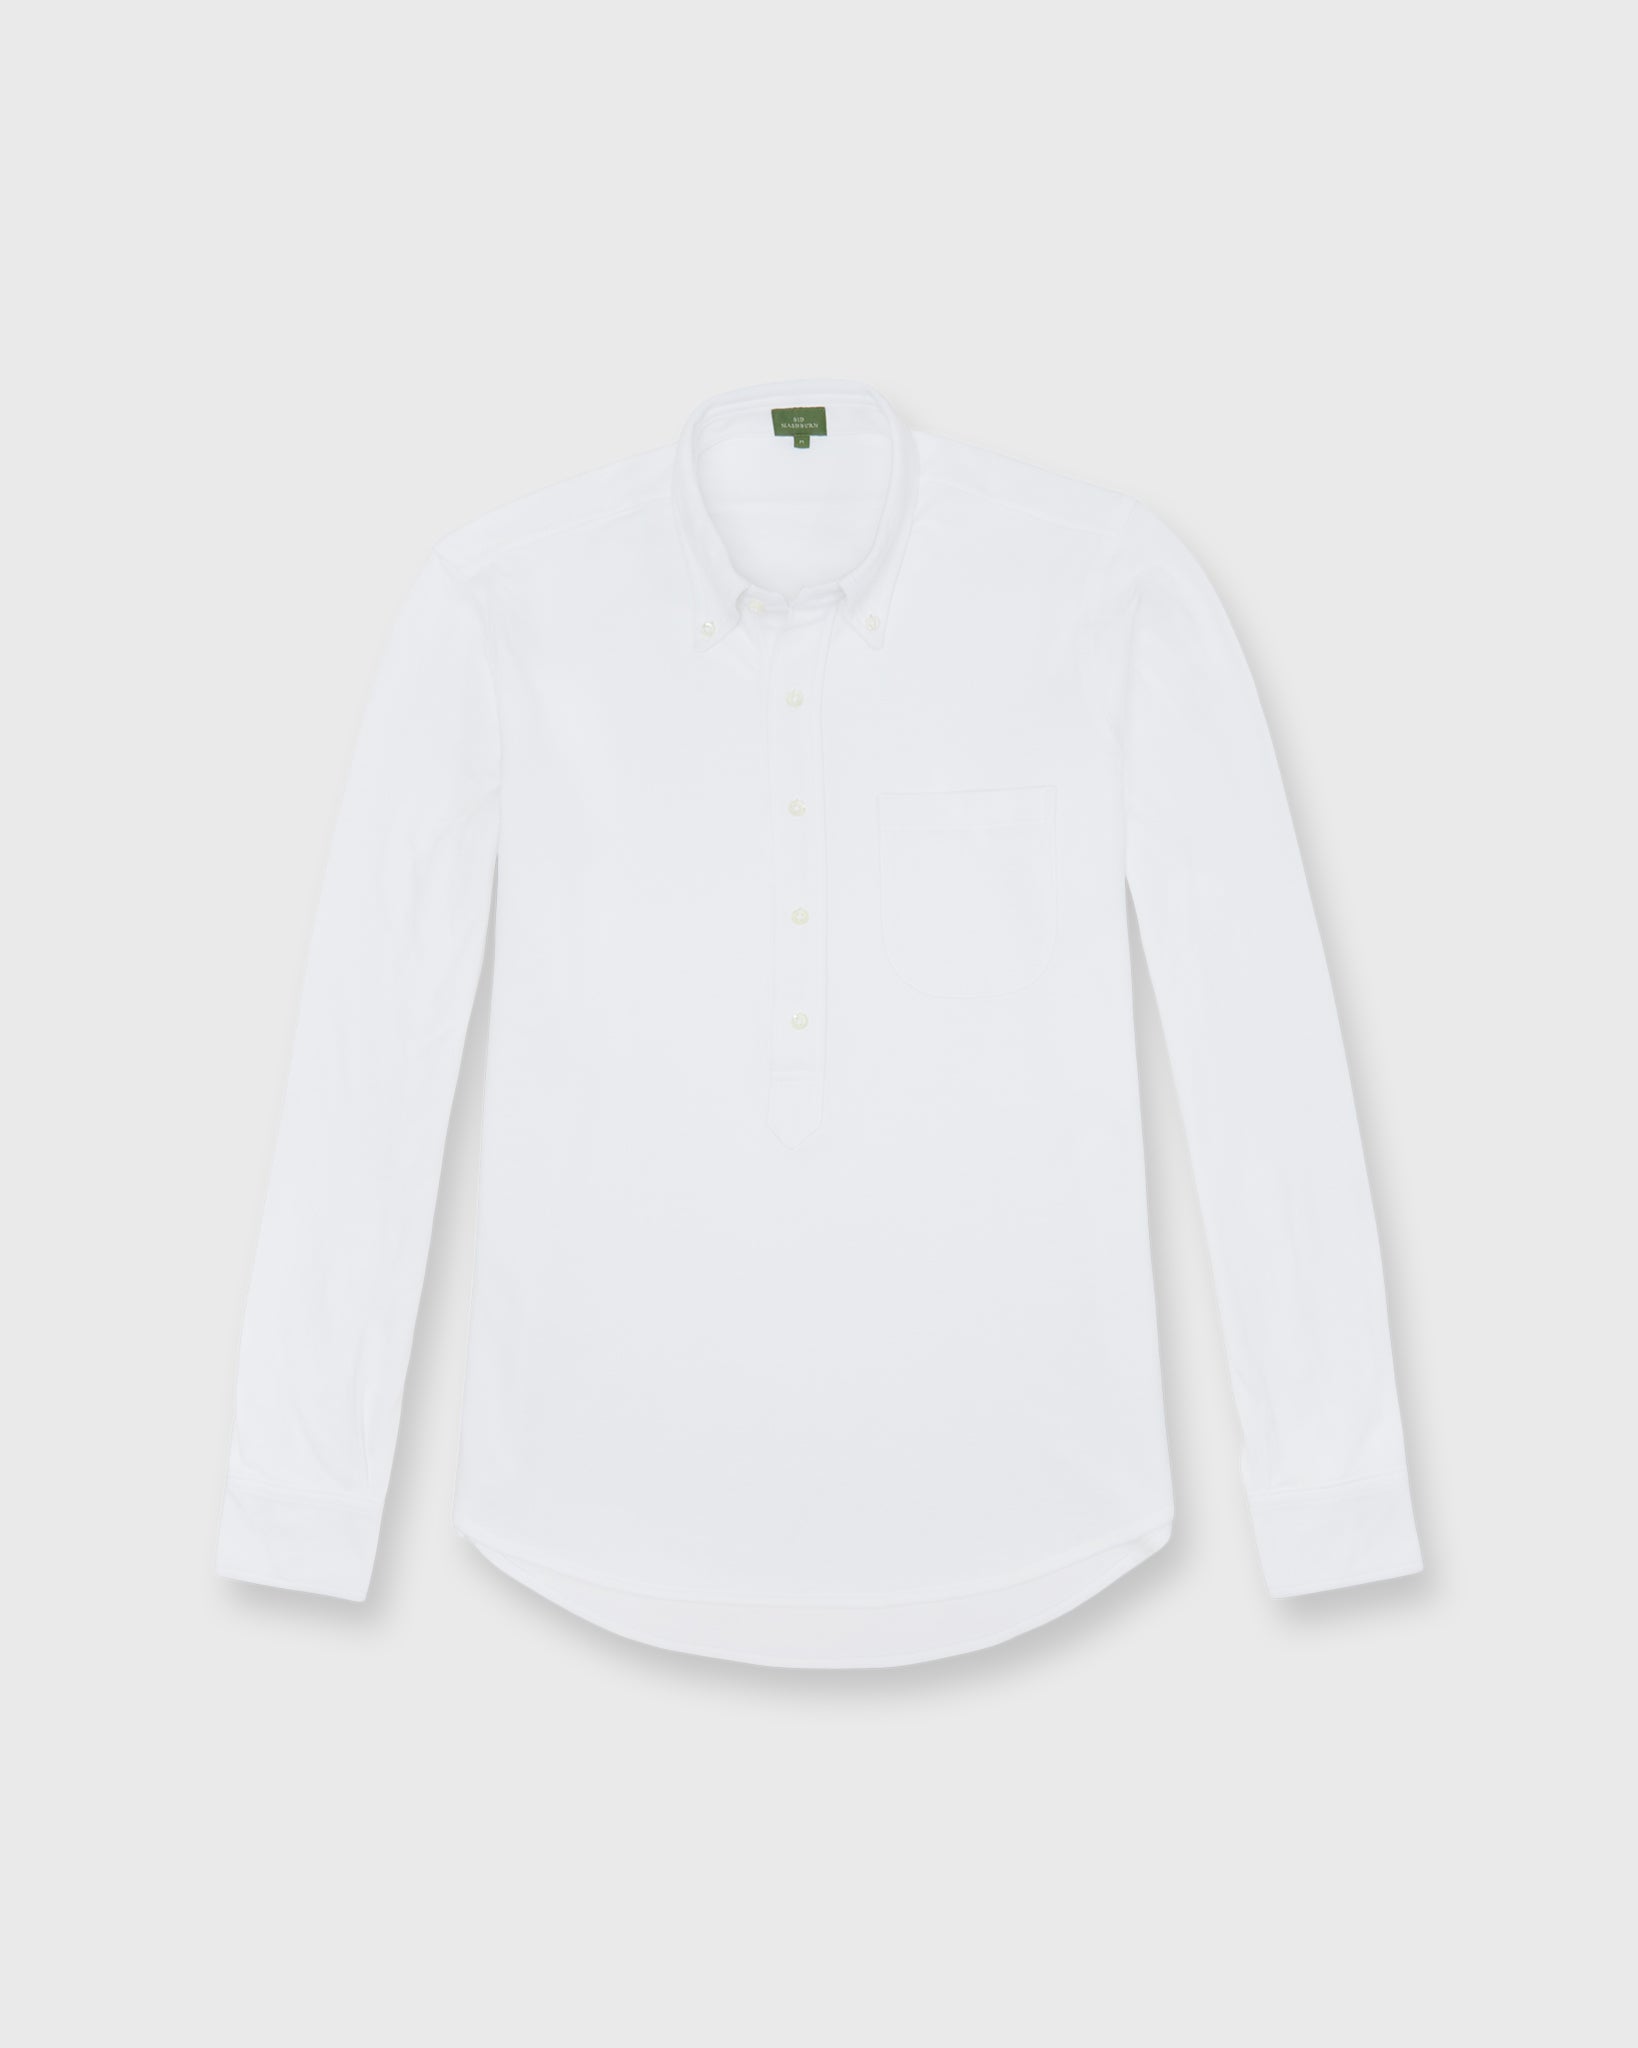 Knit Button-Down Popover Shirt in White Pima Pique